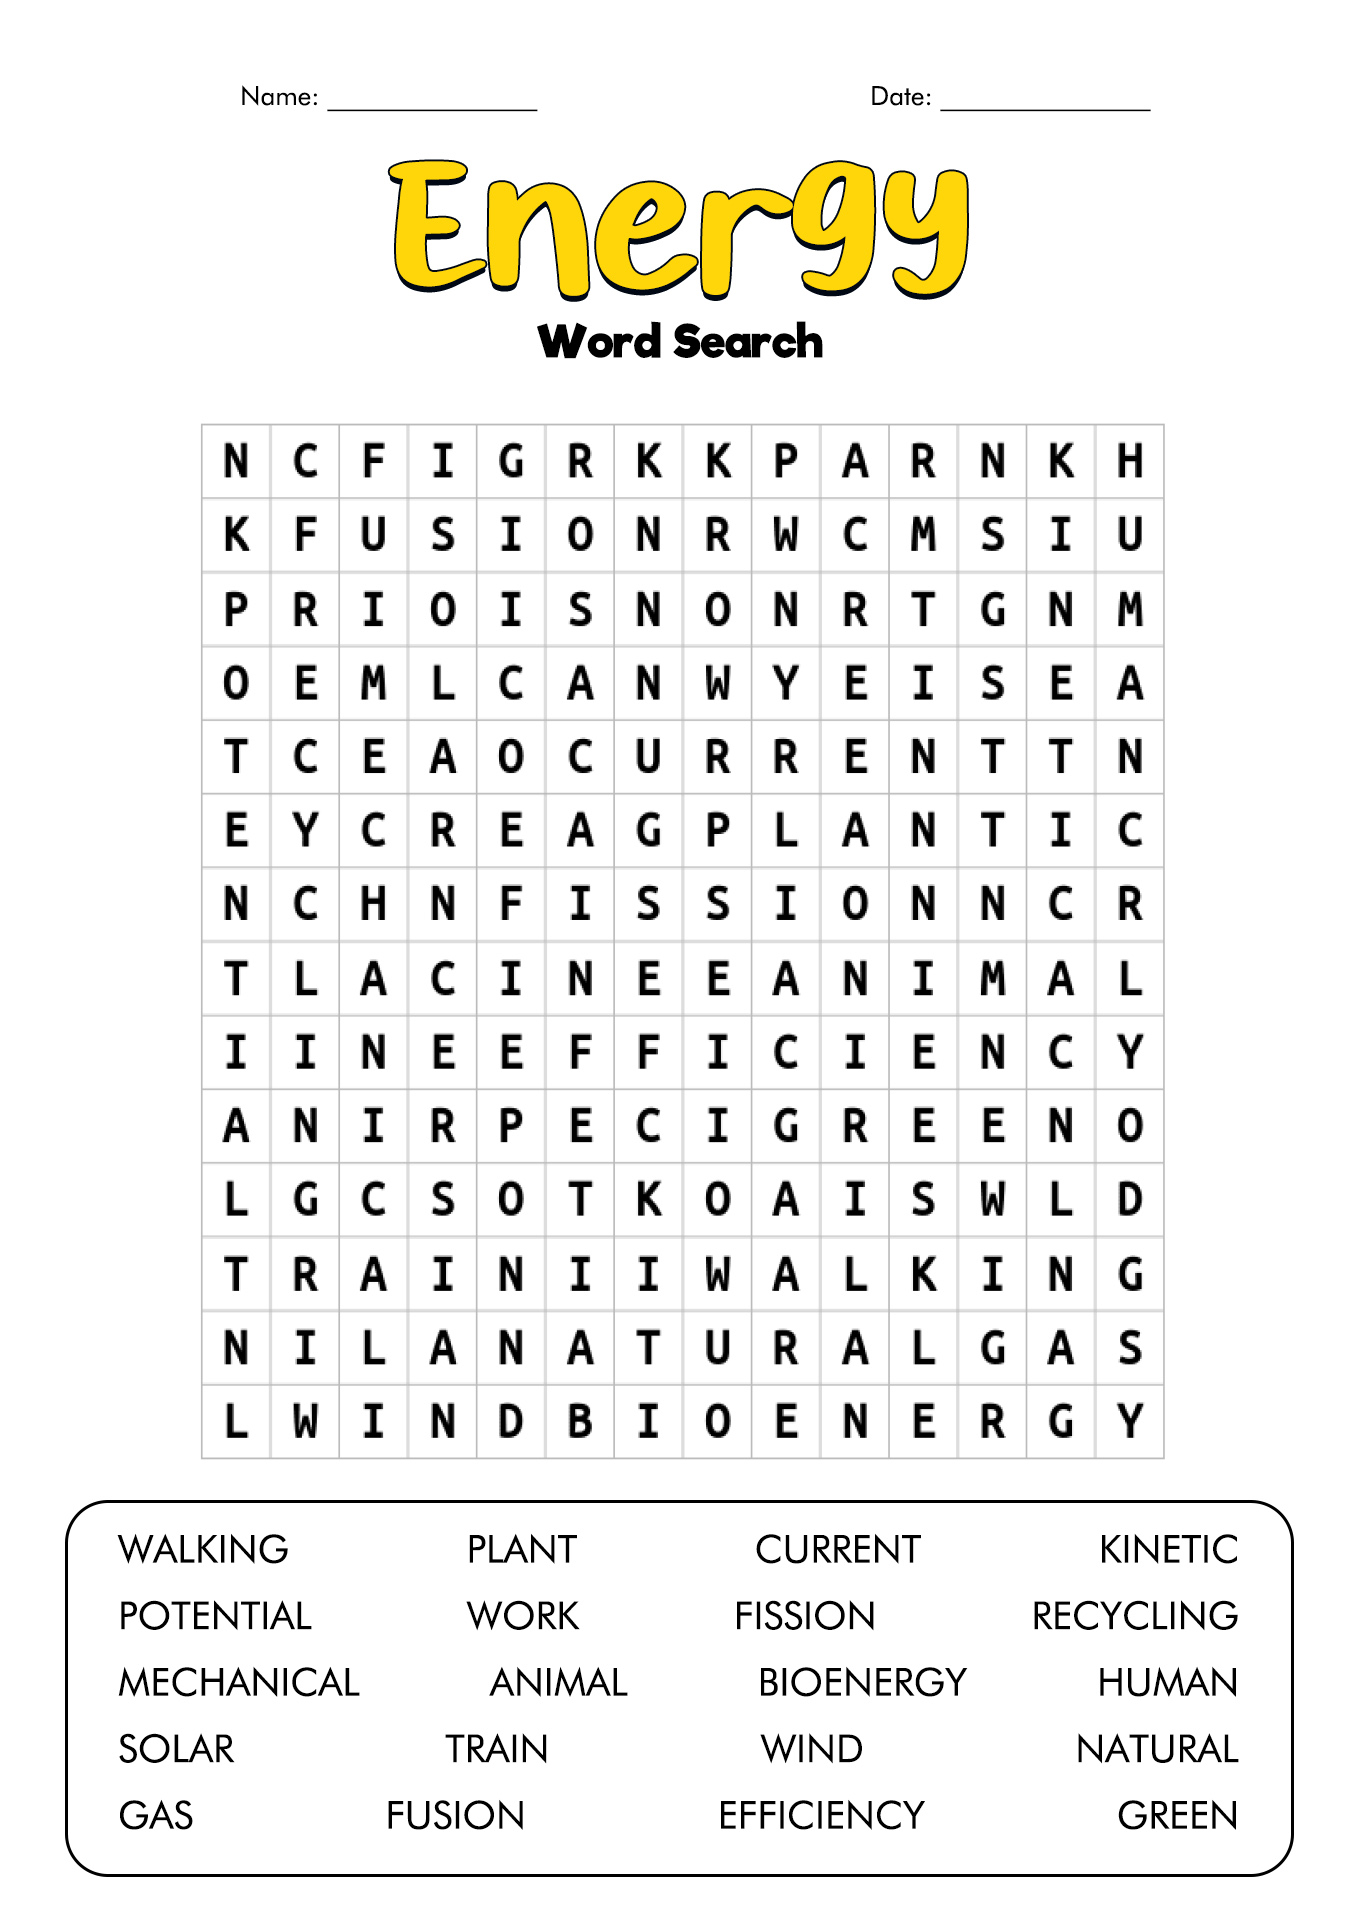 Energy Word Search Worksheet Image